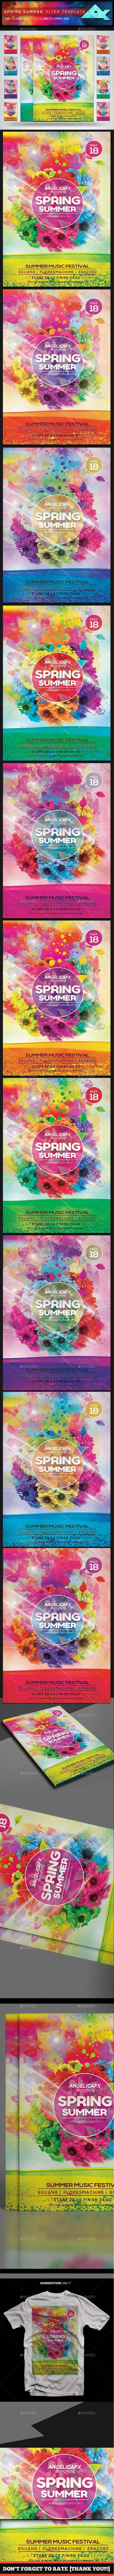 Spring Summer Festival Flyer Template